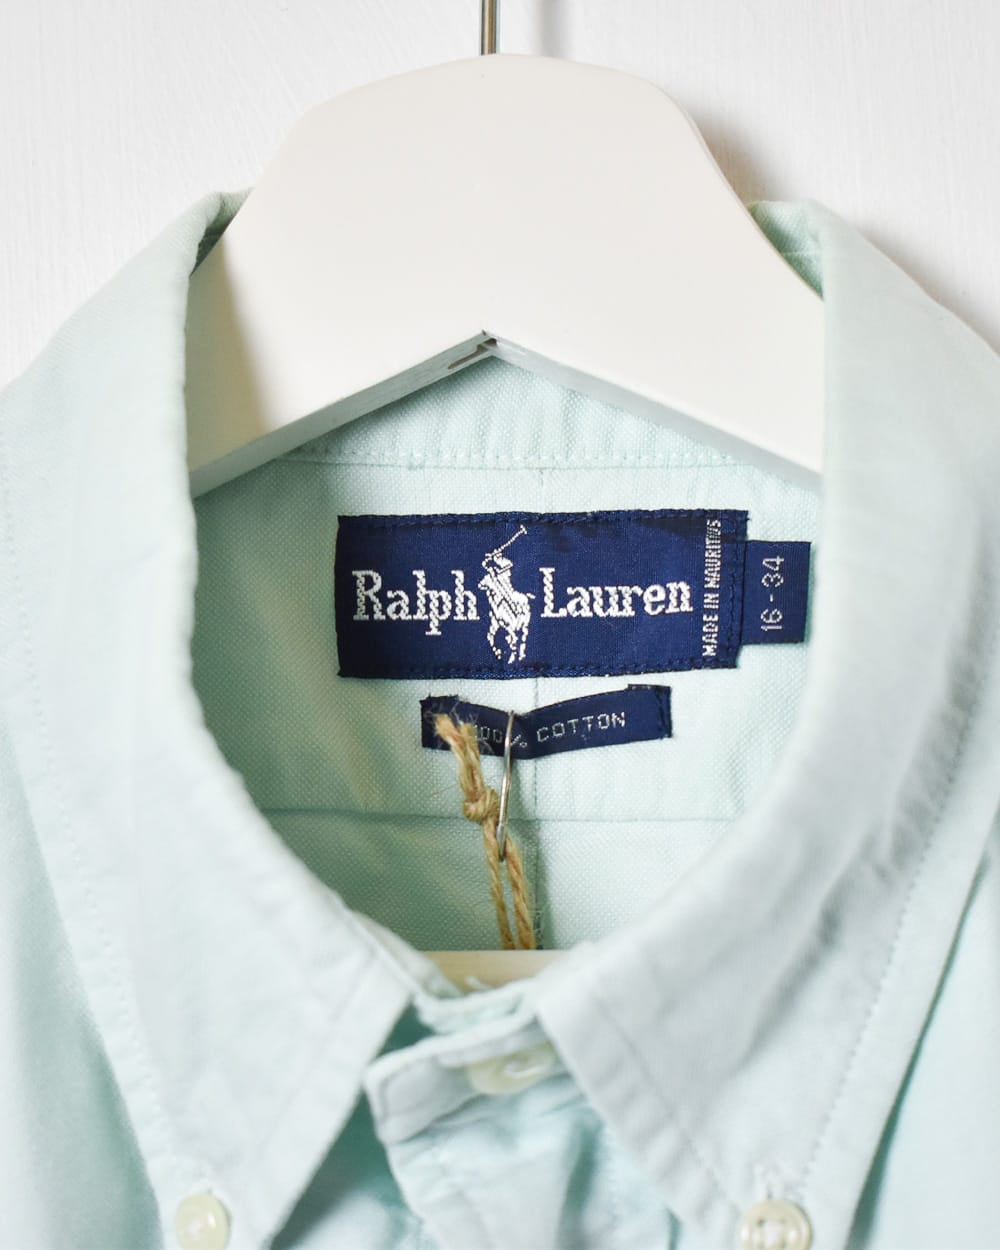 BabyBlue Polo Ralph Lauren Short Sleeved Shirt - X-Large